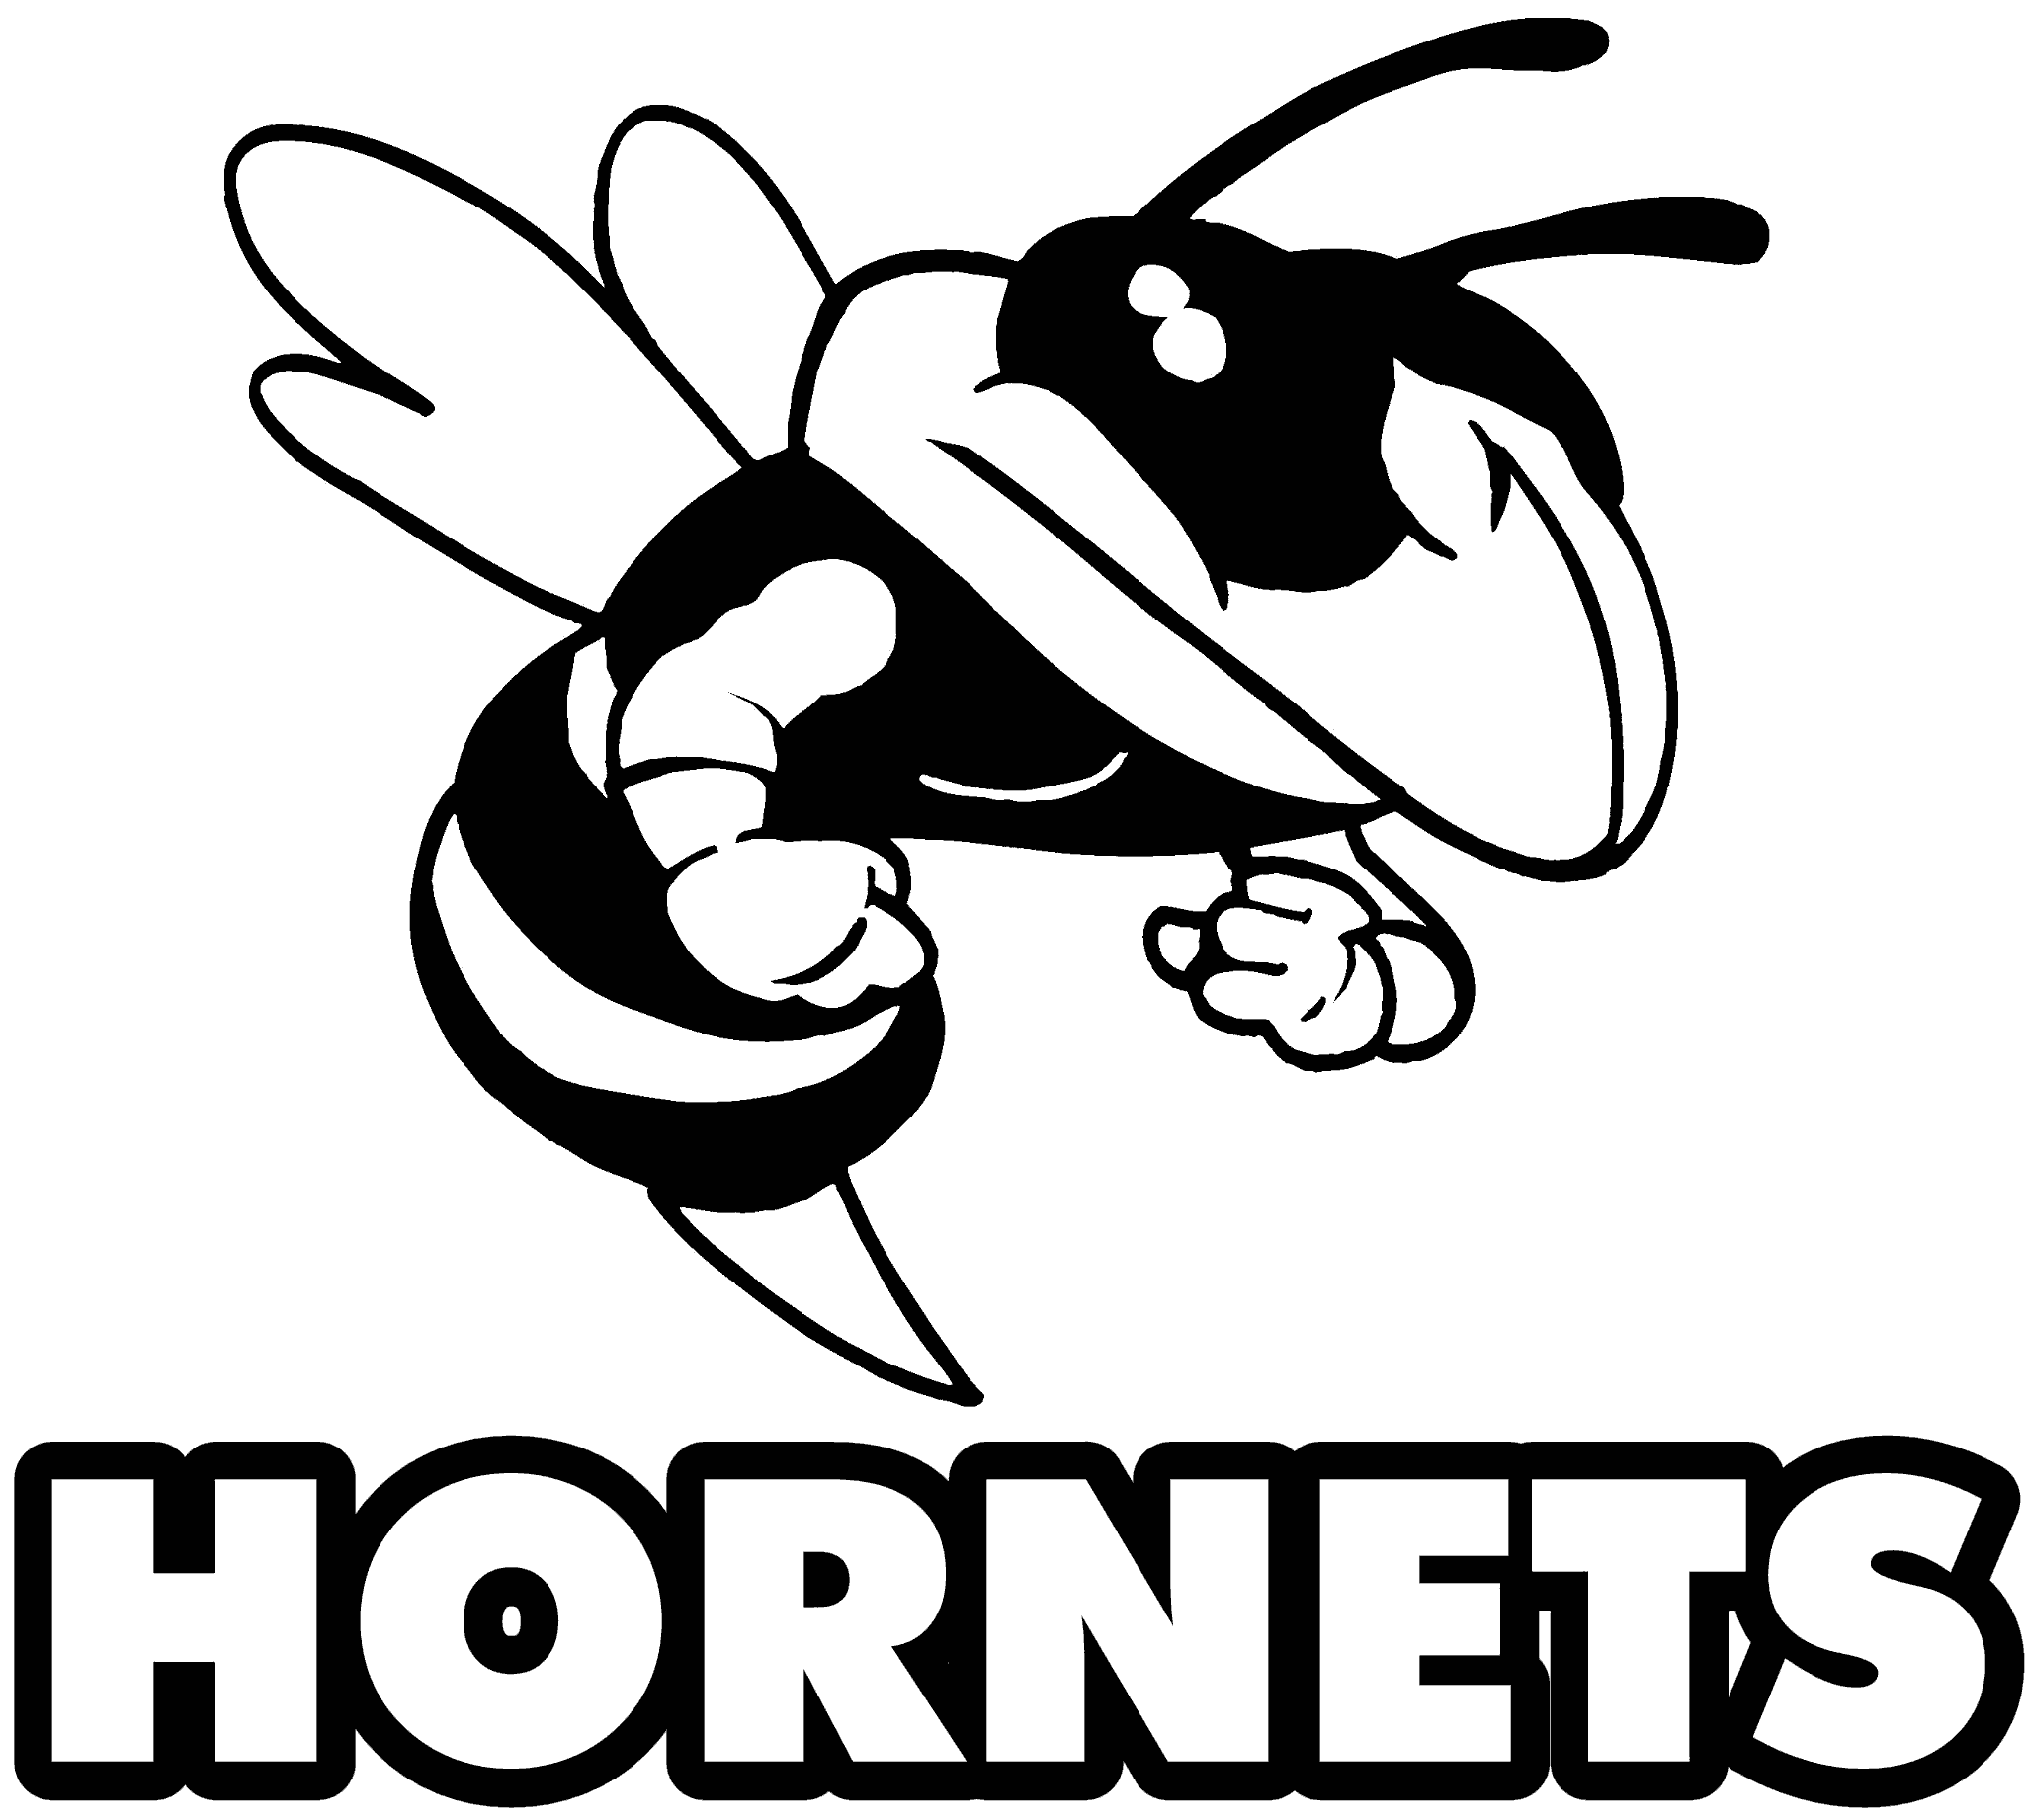 Hornets Clip Art | Clipart Panda - Free Clipart Images